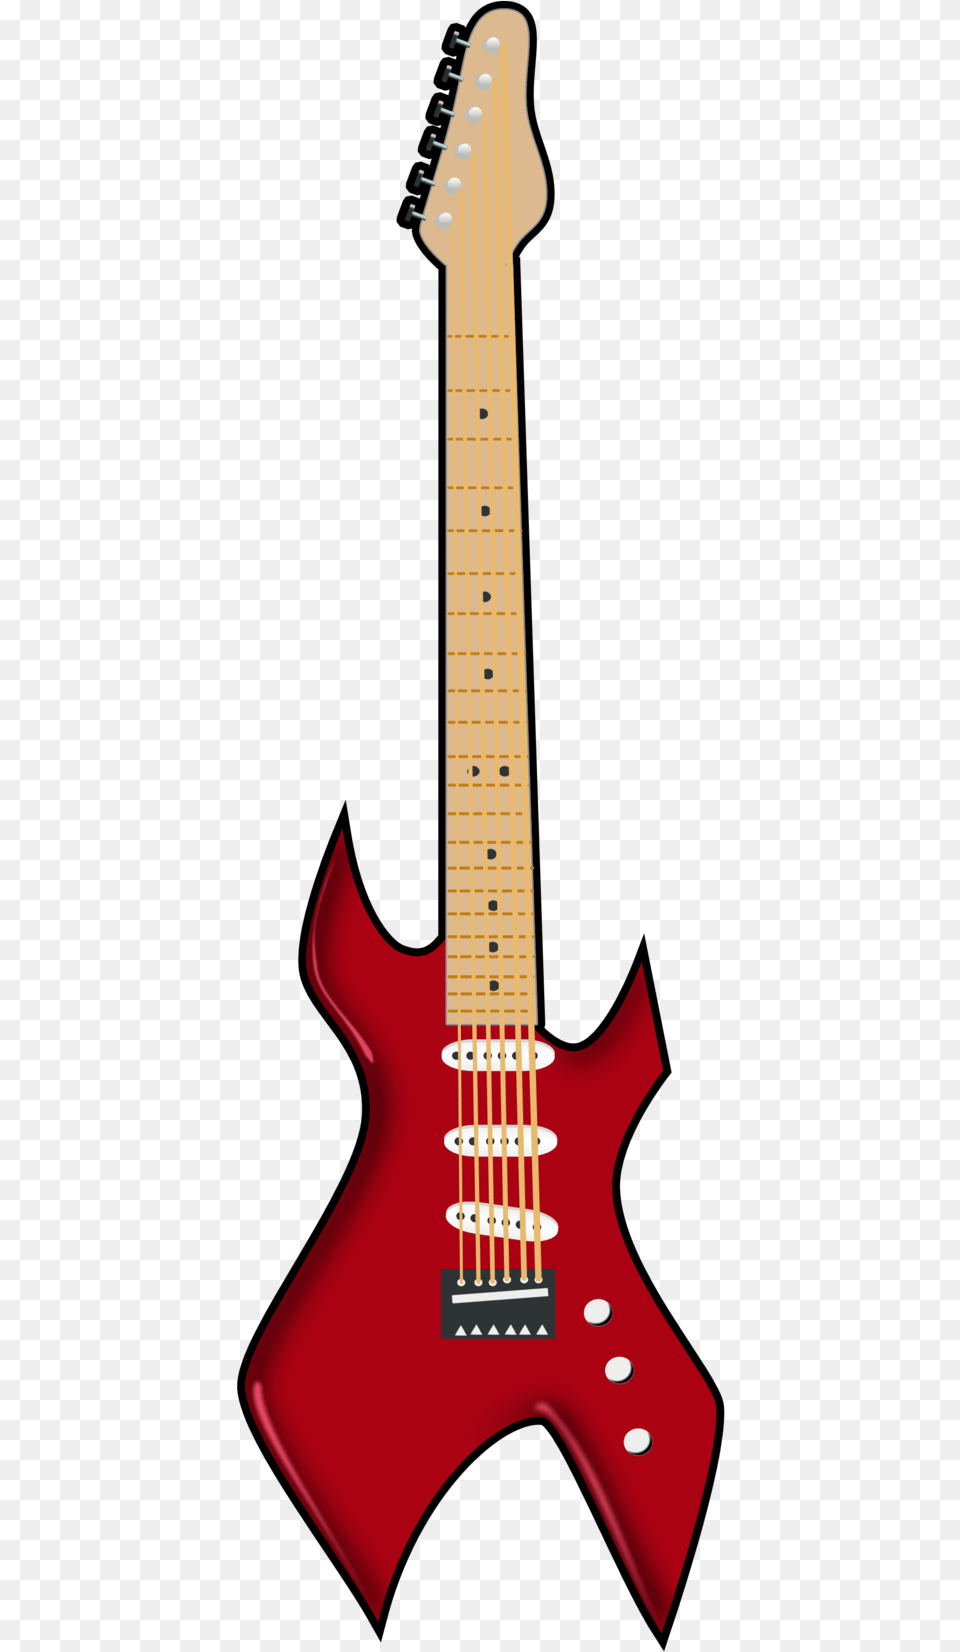 Guitar Clipart Boy Guitar Electricity Clipart, Electric Guitar, Musical Instrument, Bass Guitar Free Png